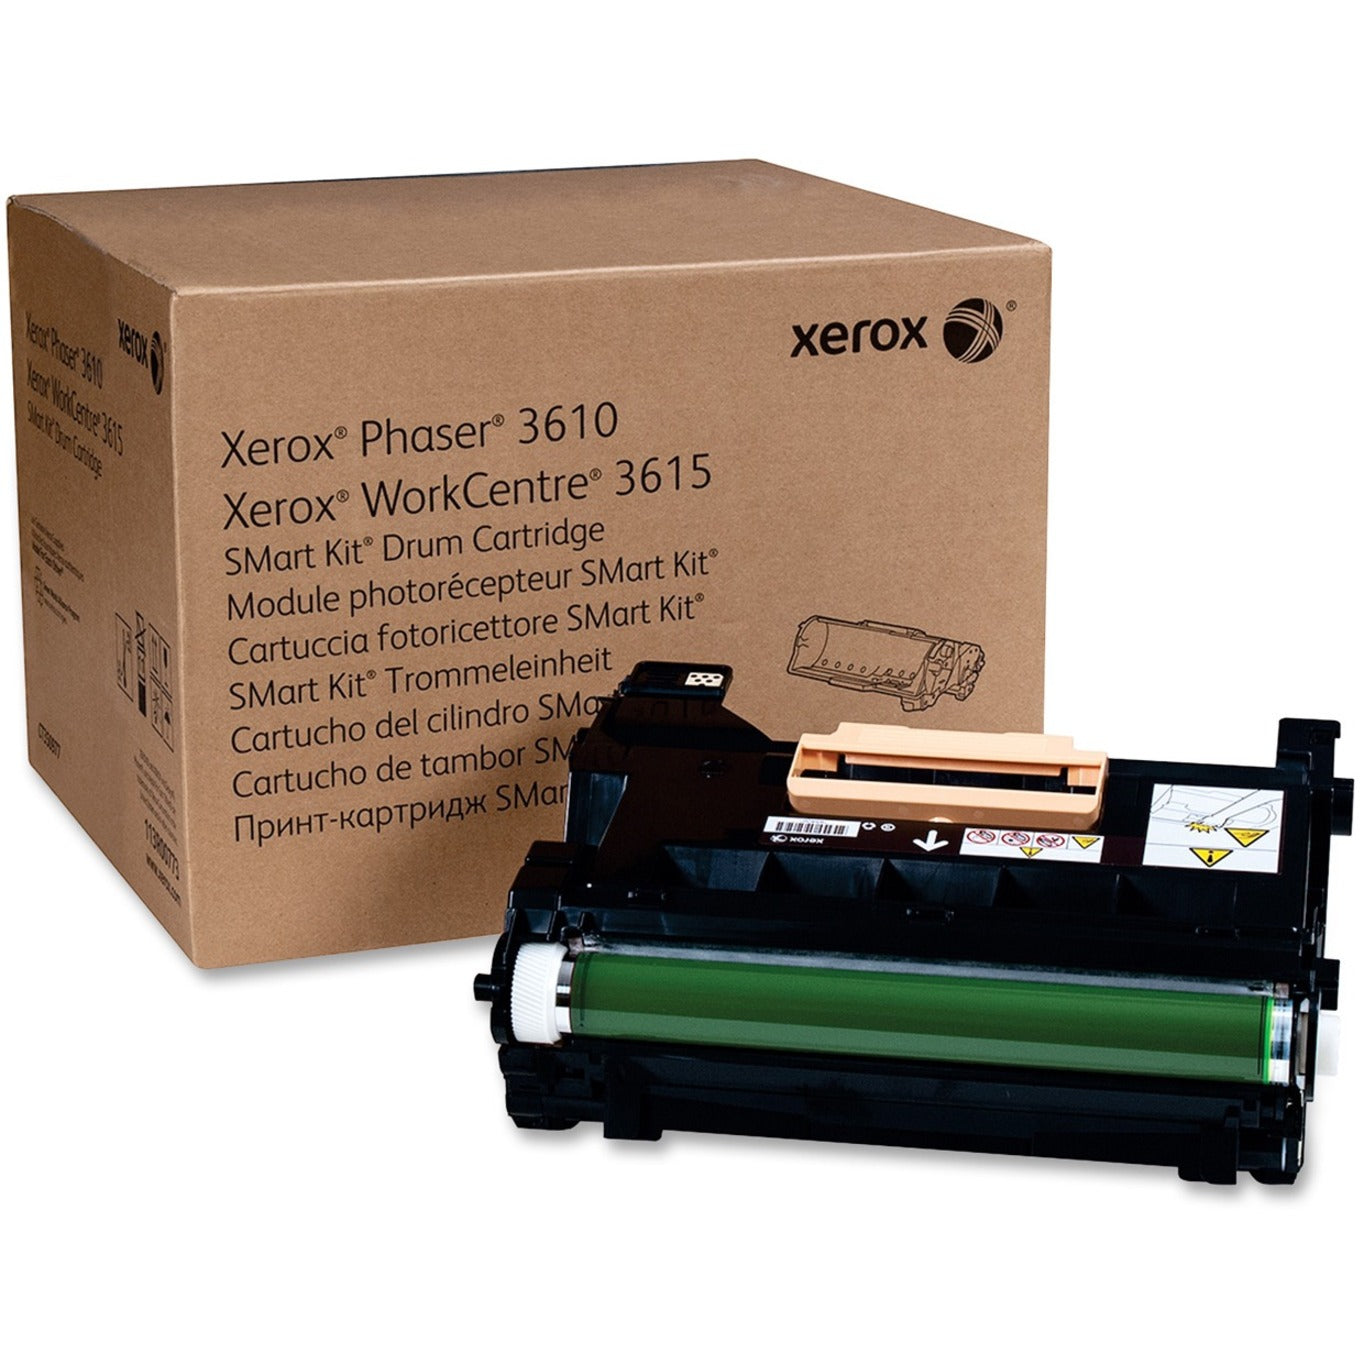 Xerox 113R00773 Phaser 3610/WorkCentre 3615 Drum Cartridge, Black Laser Imaging Drum